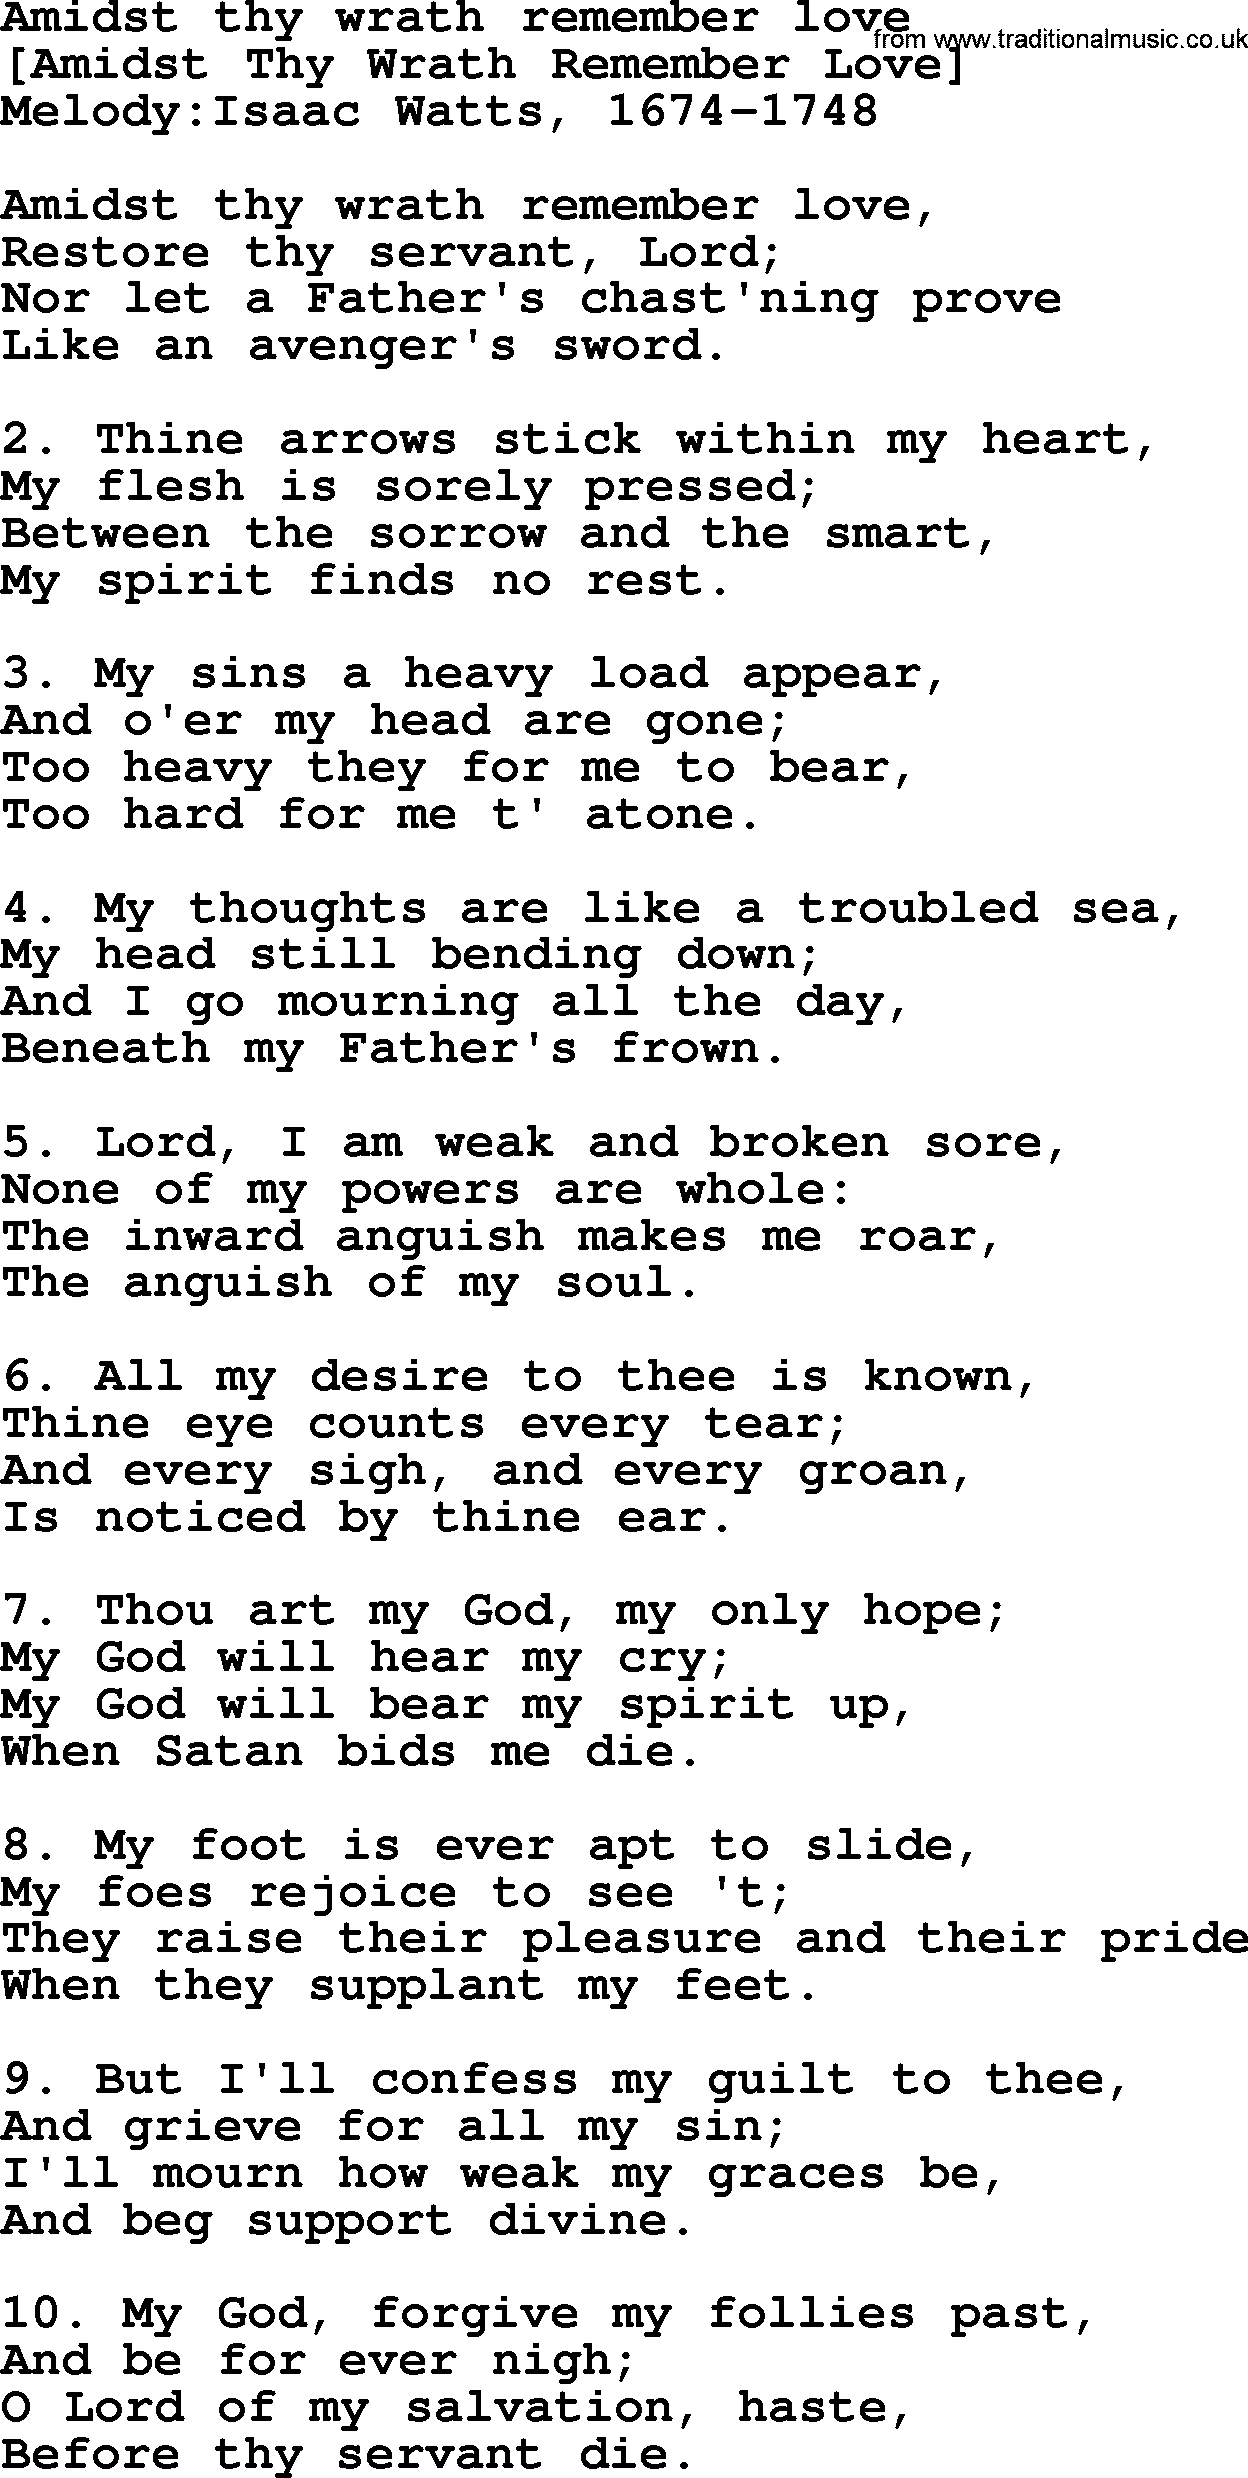 Old English Song: Amidst Thy Wrath Remember Love lyrics